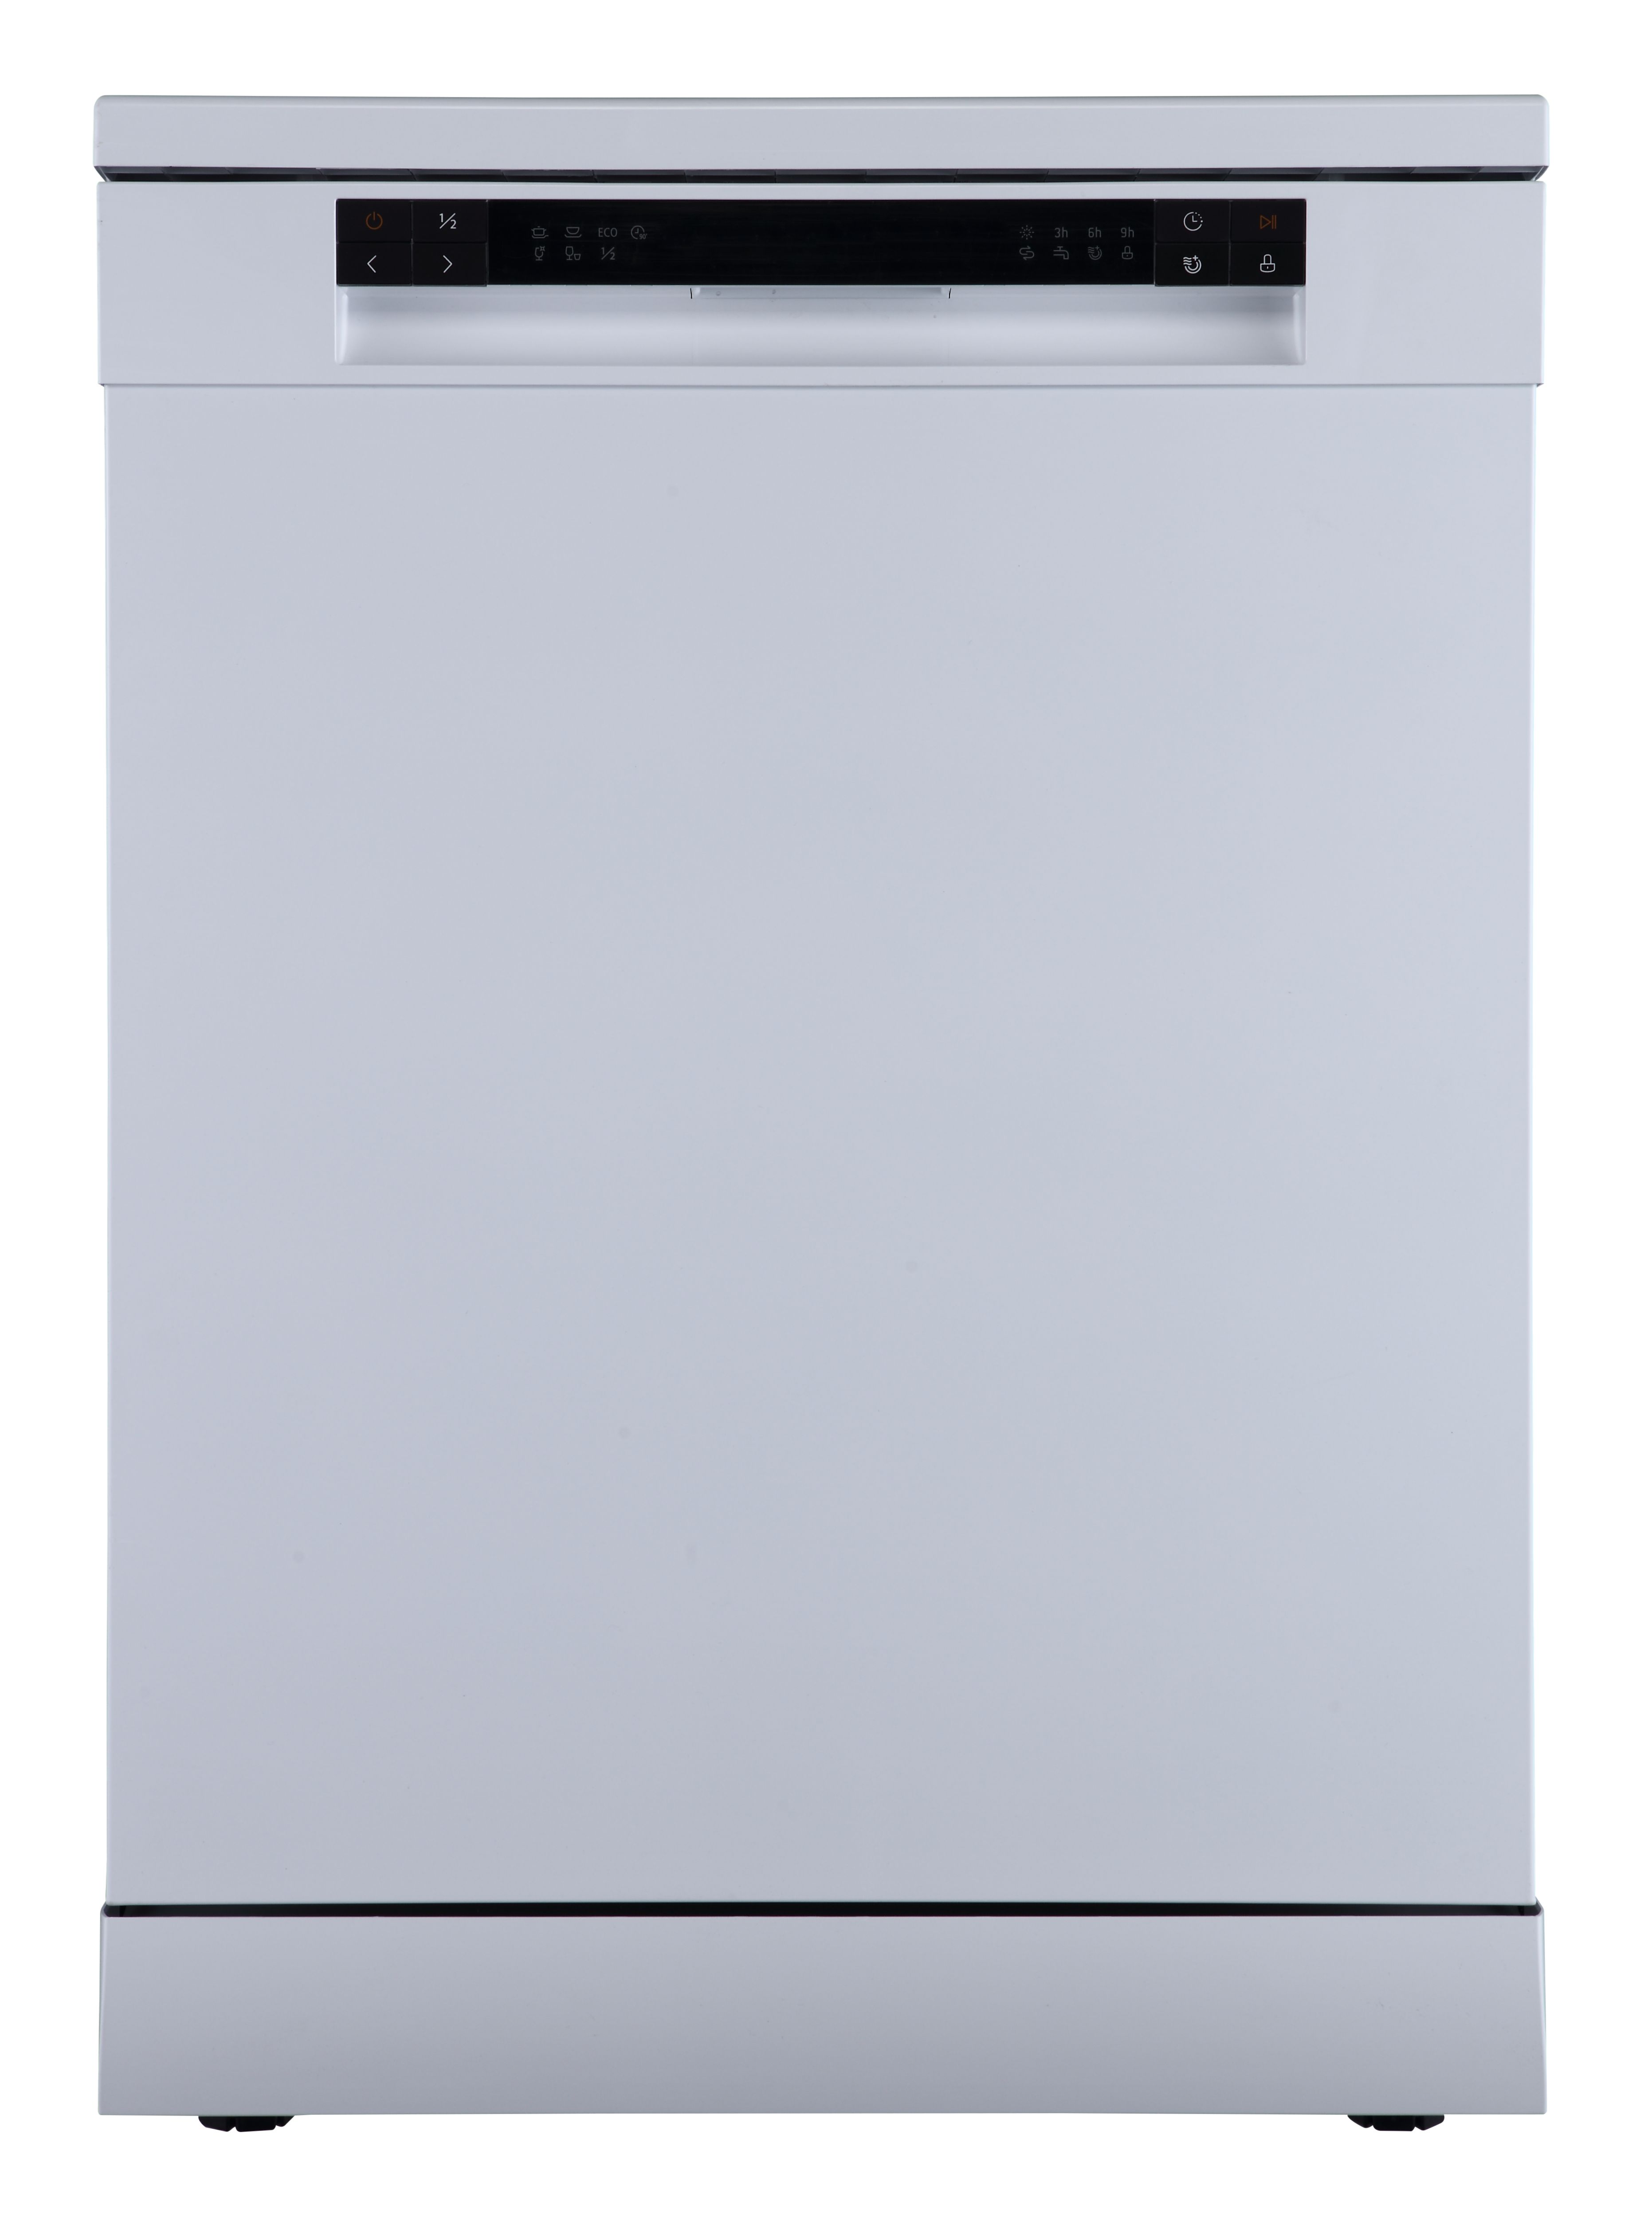 FS60DISHUK Freestanding Full size Dishwasher - White